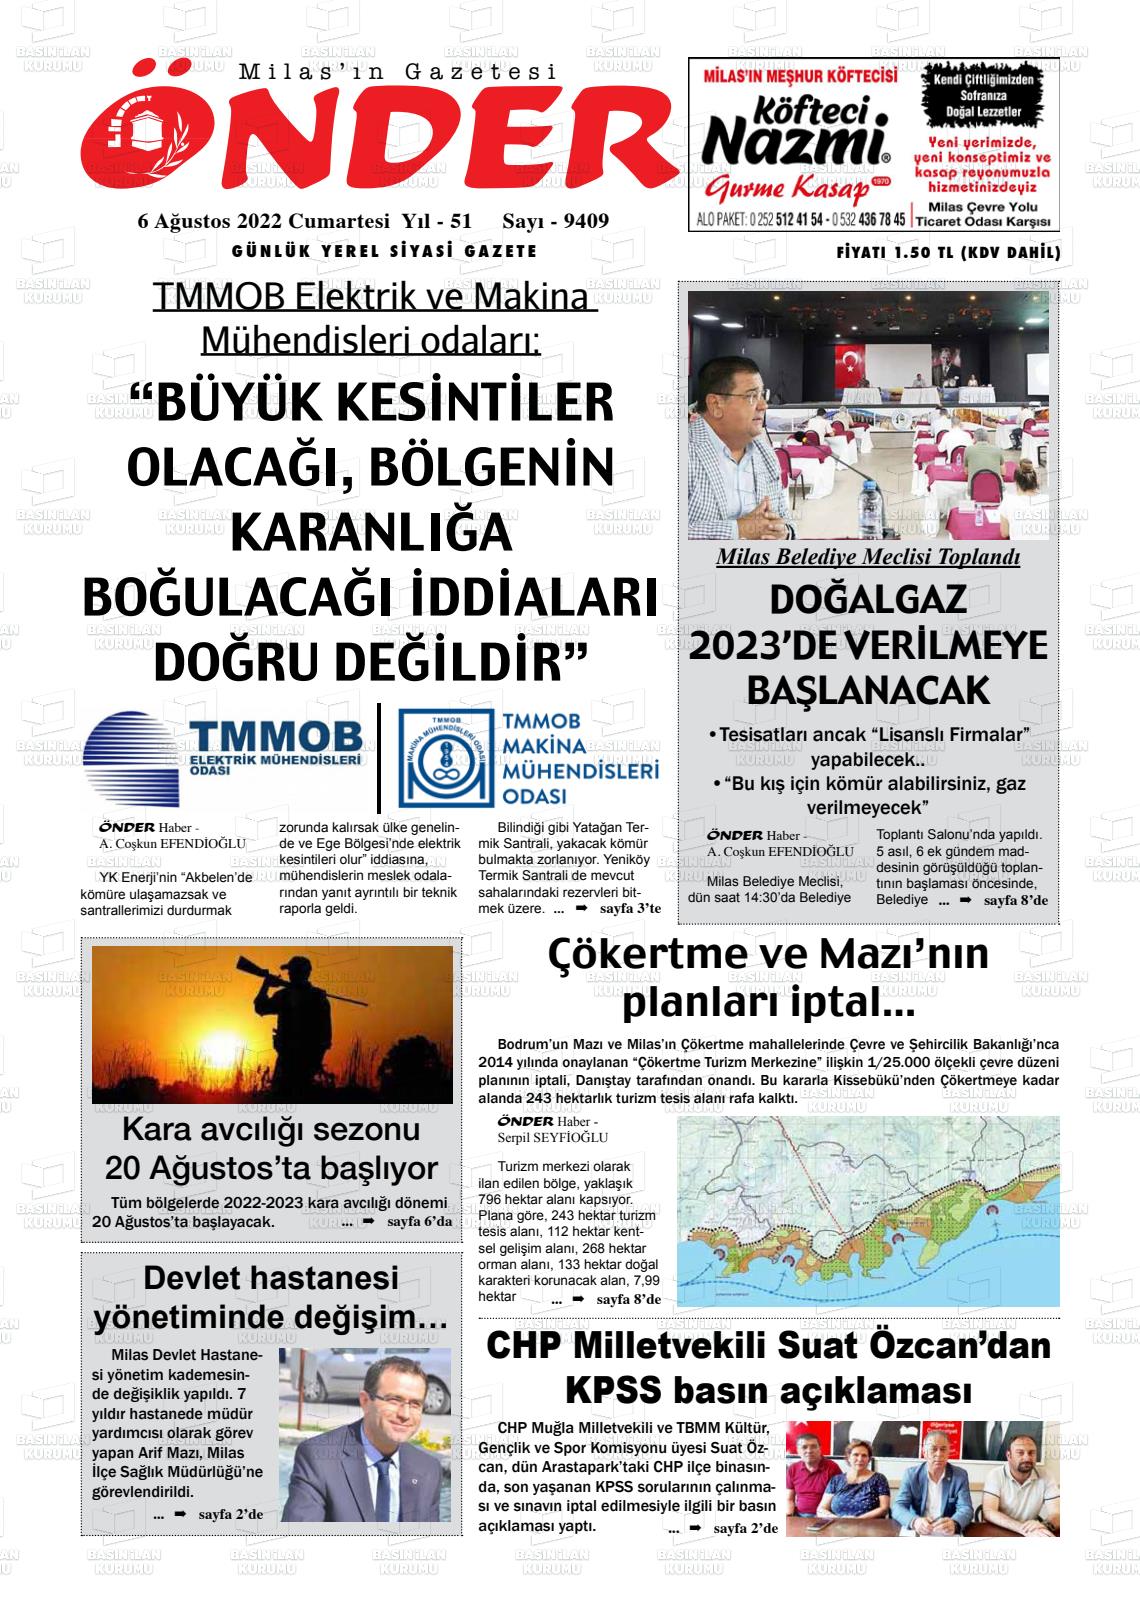 06 Ağustos 2022 Milas Önder Gazete Manşeti